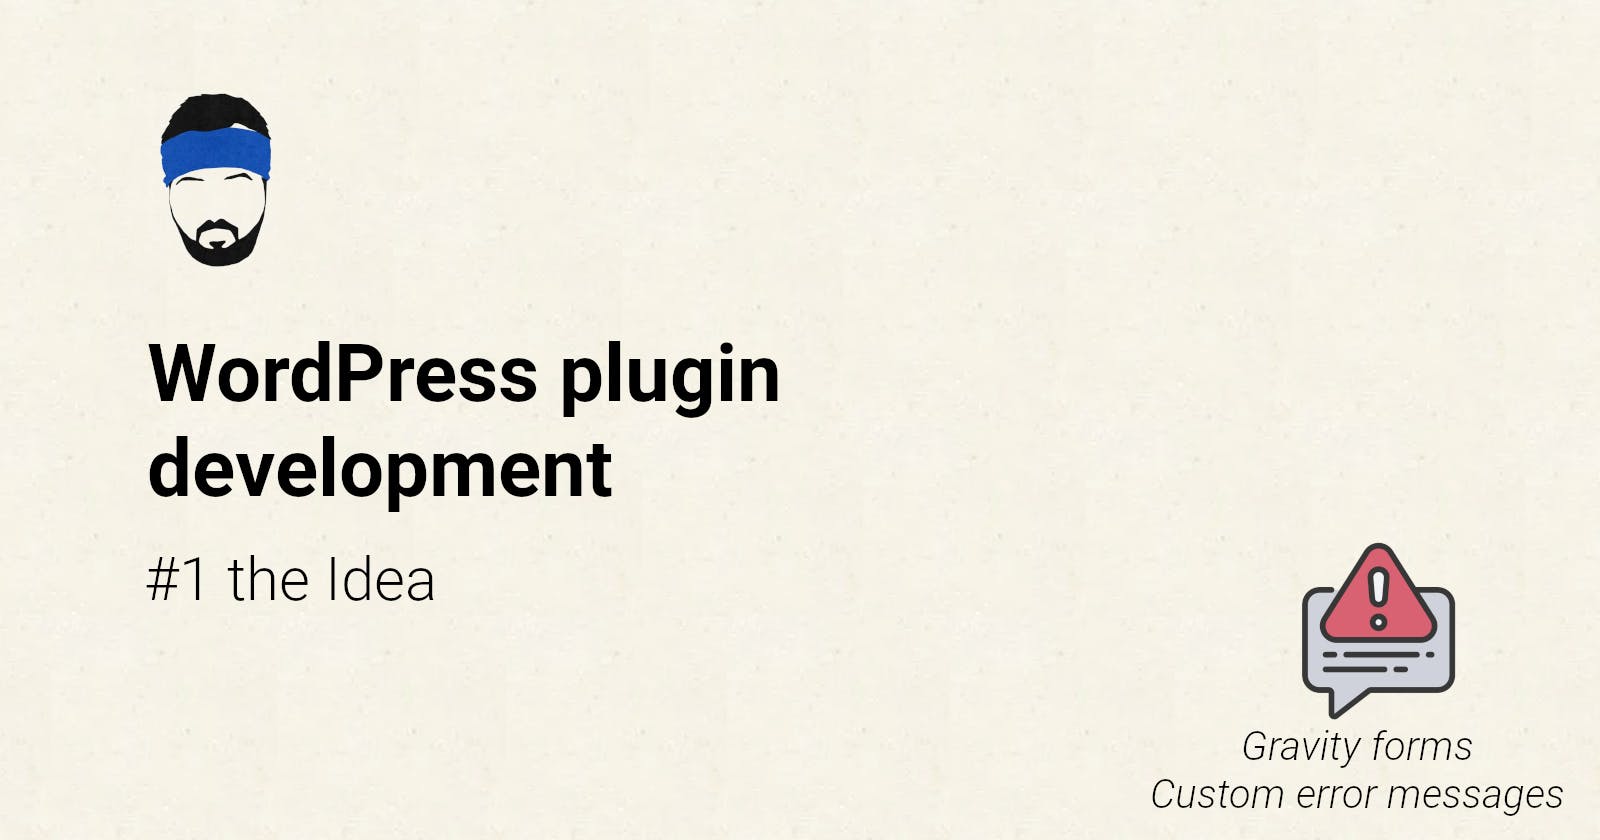 WordPress plugin development #1